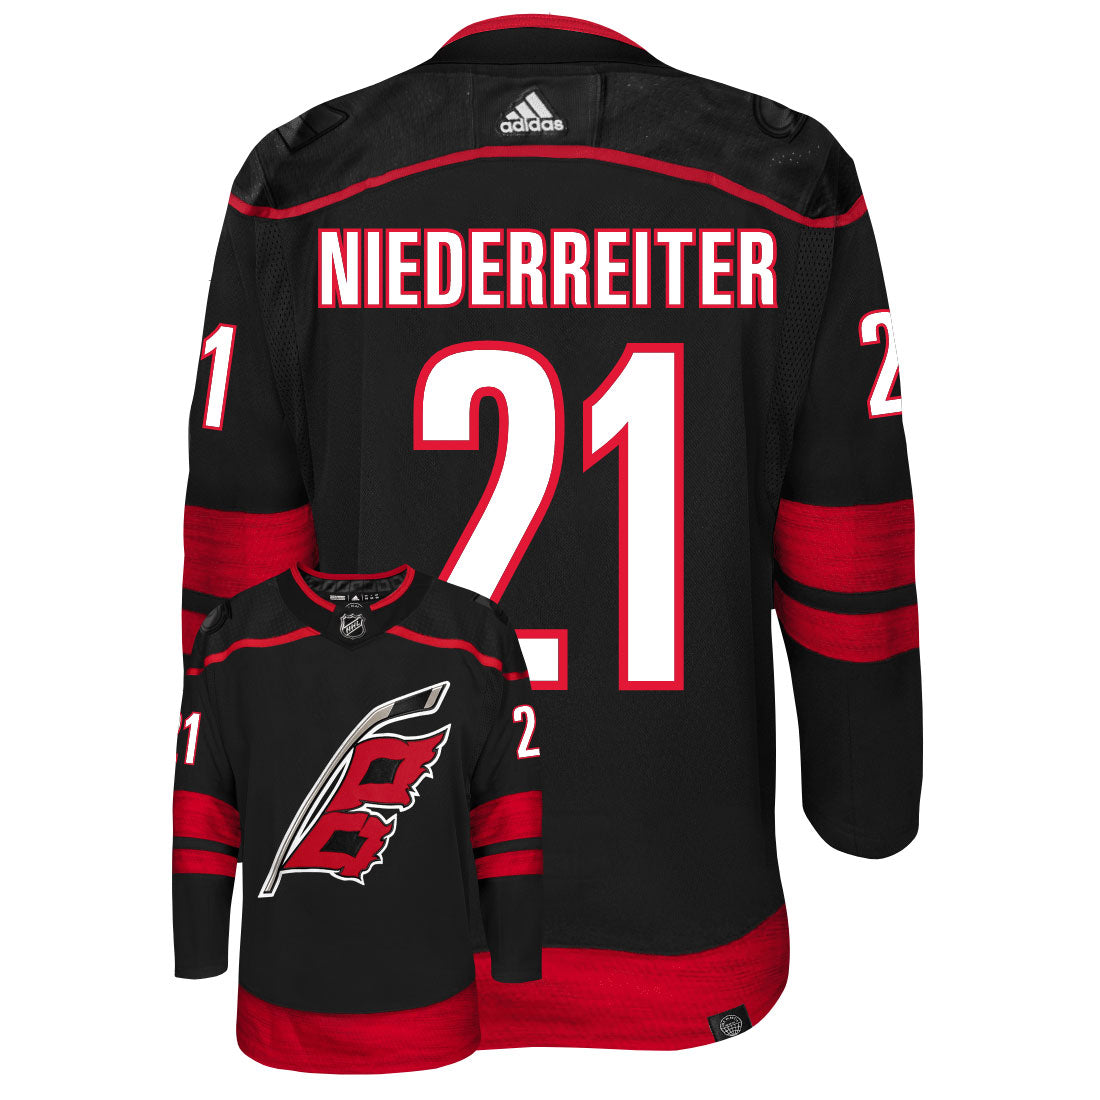 Nino Niederreiter Carolina Hurricanes Adidas Primegreen Authentic Third Alternate NHL Hockey Jersey - Back/Front View